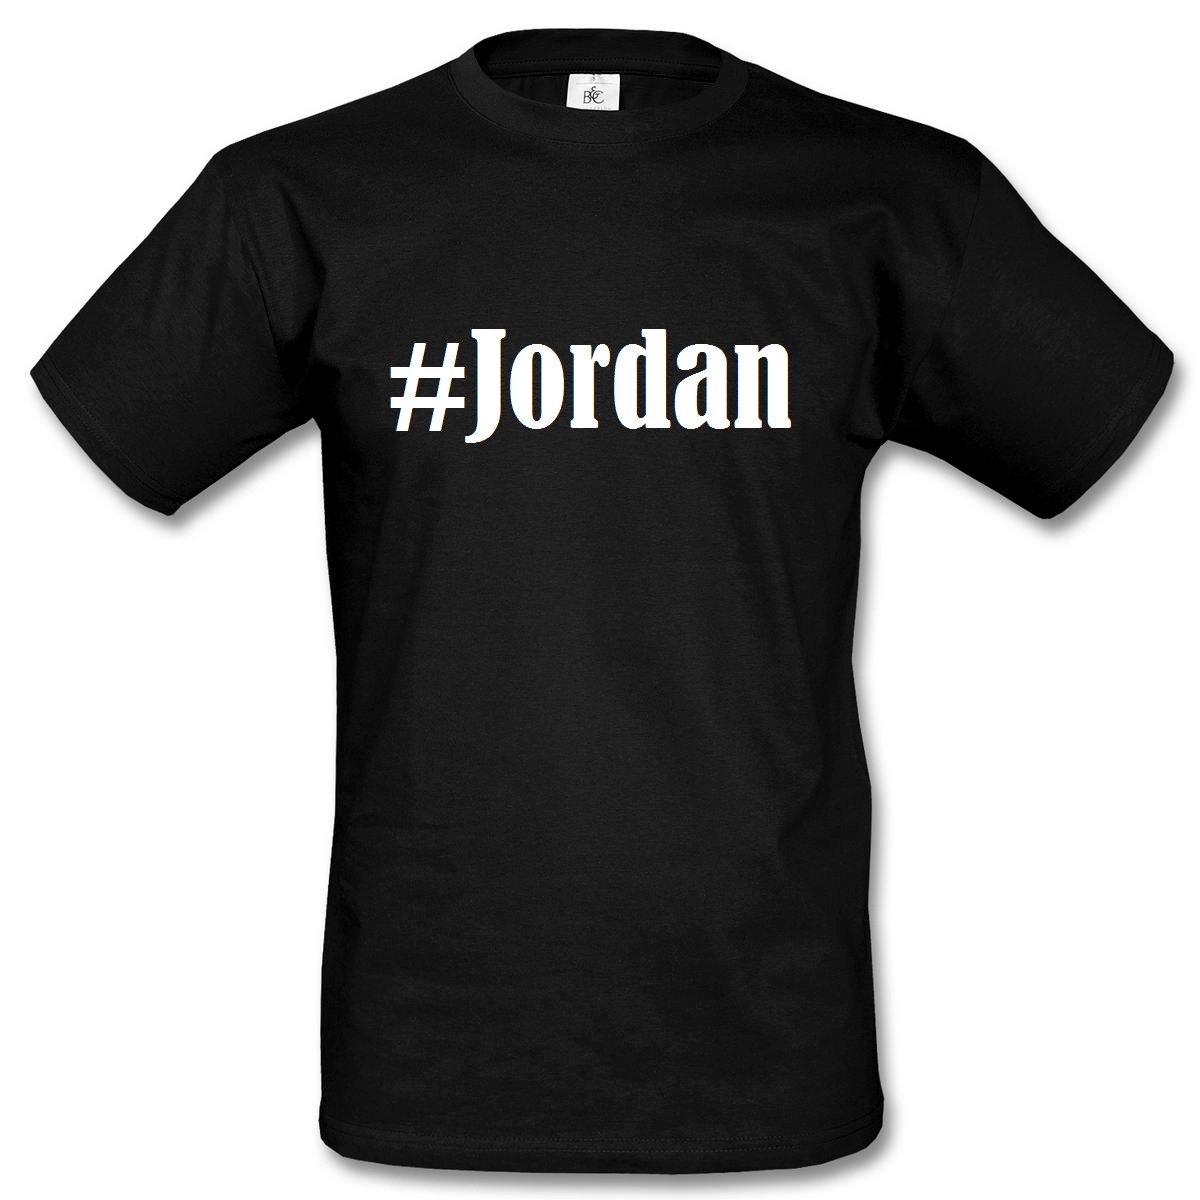 Camiseta #Jordan para mujer y niño | eBay